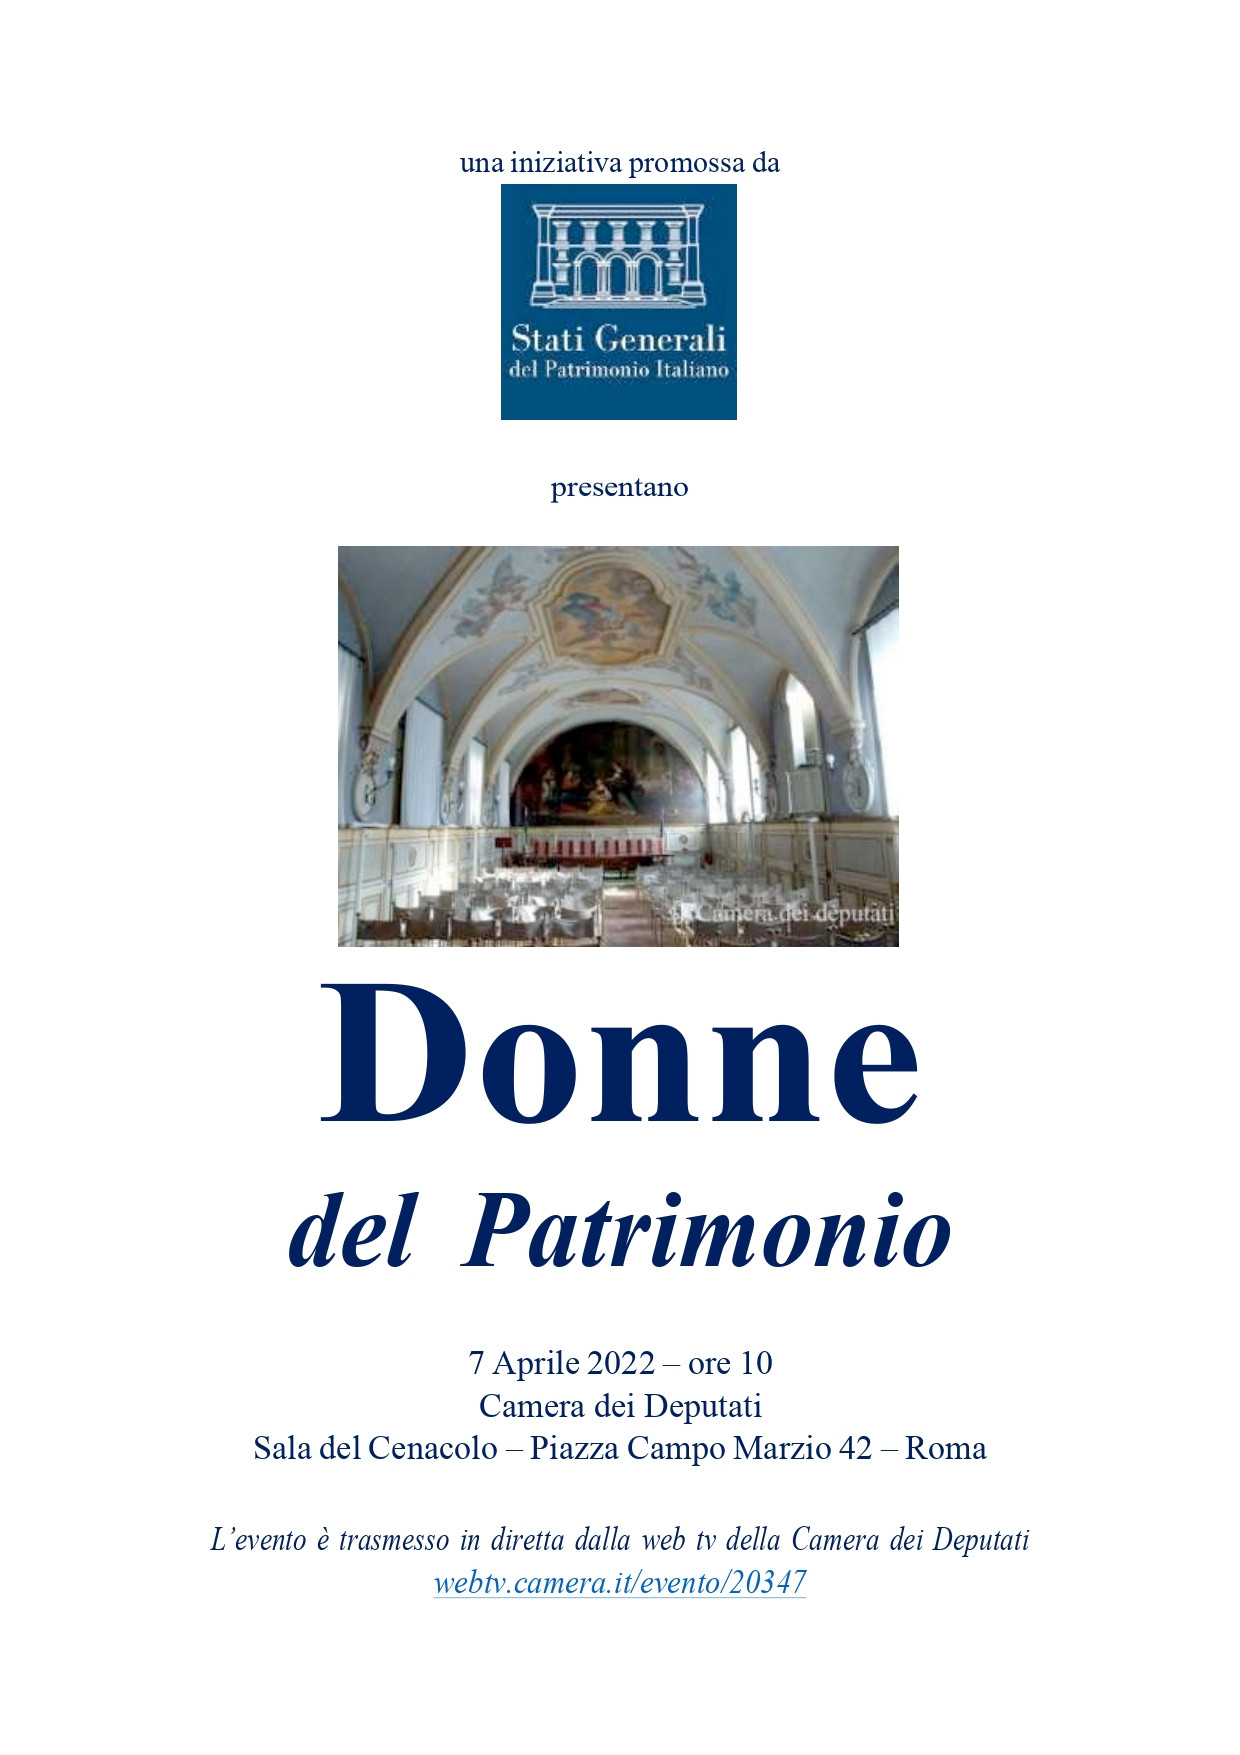 Donne del Patrimonio programma def_01-04-22 (1)_page-0001.jpg